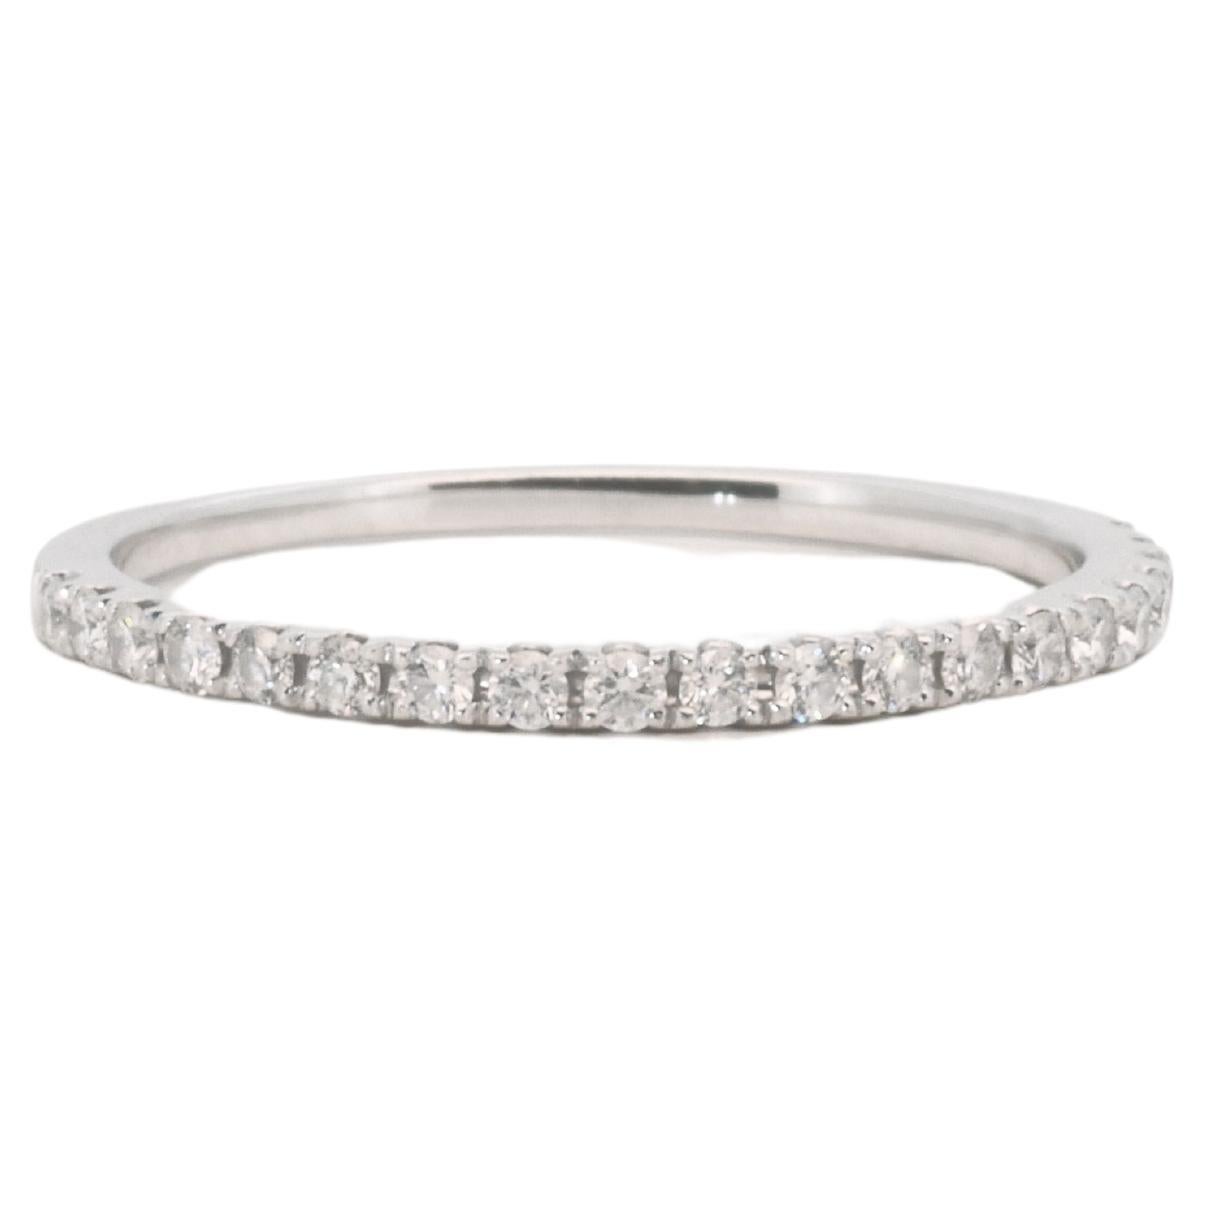 Stunning Platinum Half Eternity Thin Band Ring with 0.15ct Natural Diamonds